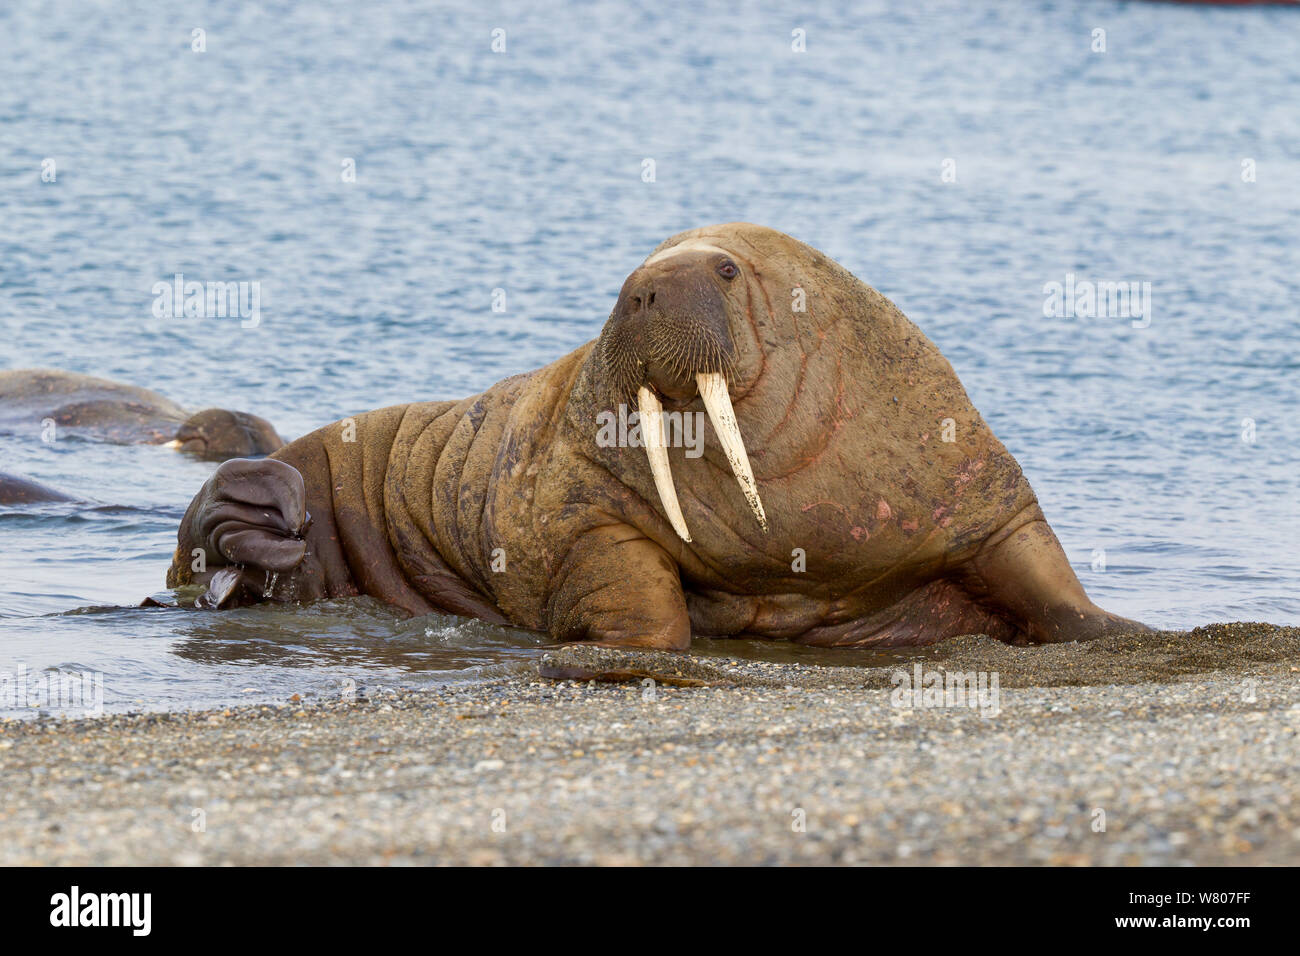 Walrus (Odobenus rosmarus) hauled out, Spitsbergen, Svalbard Archipelago, Norway, Arctic Ocean. July. Stock Photo